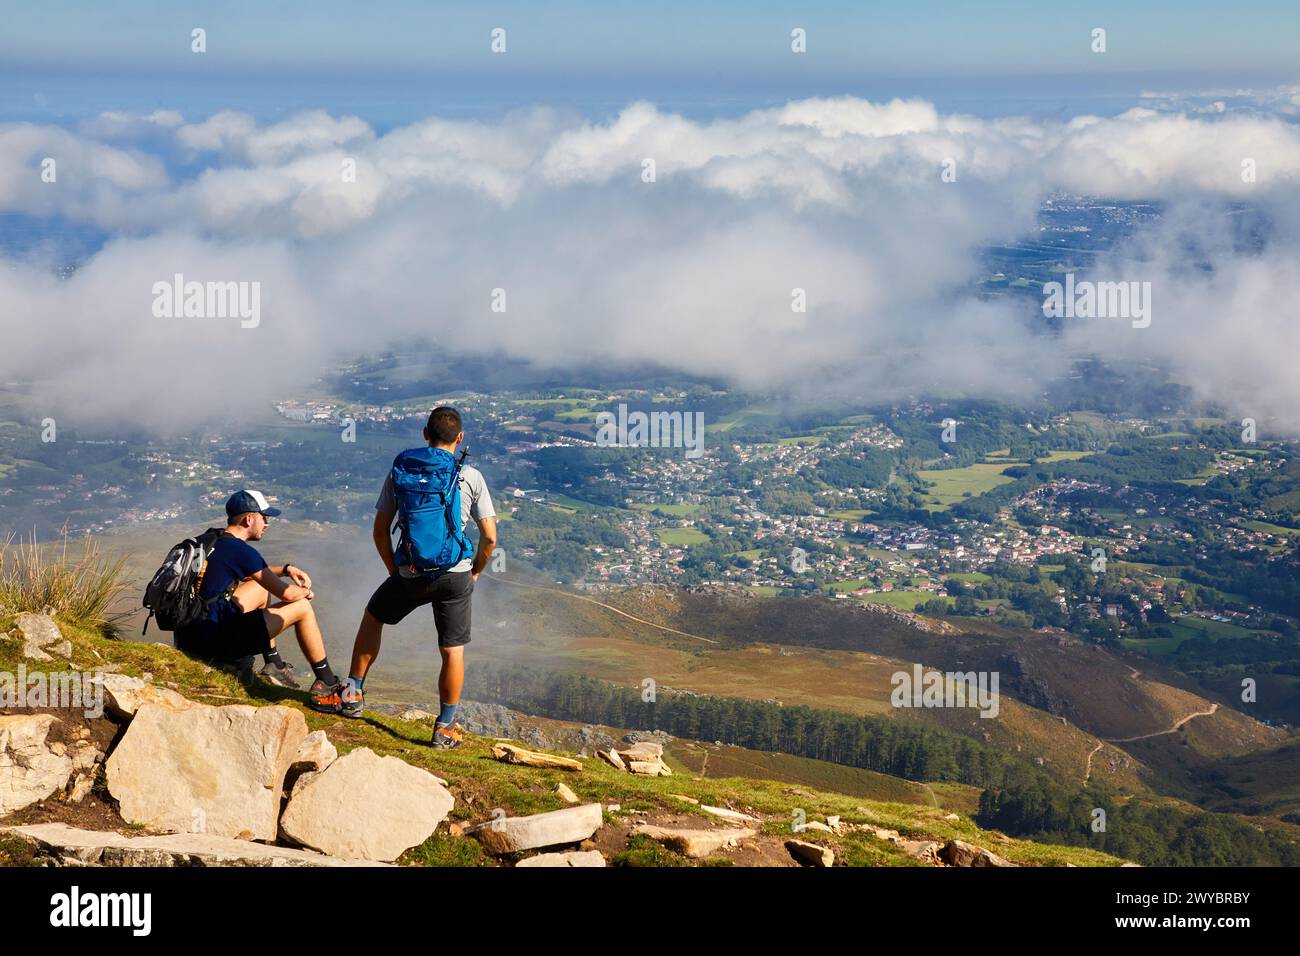 Mountaineers, Larrune mountain, La Rhune, Border between Spain and France, Europe. Stock Photo